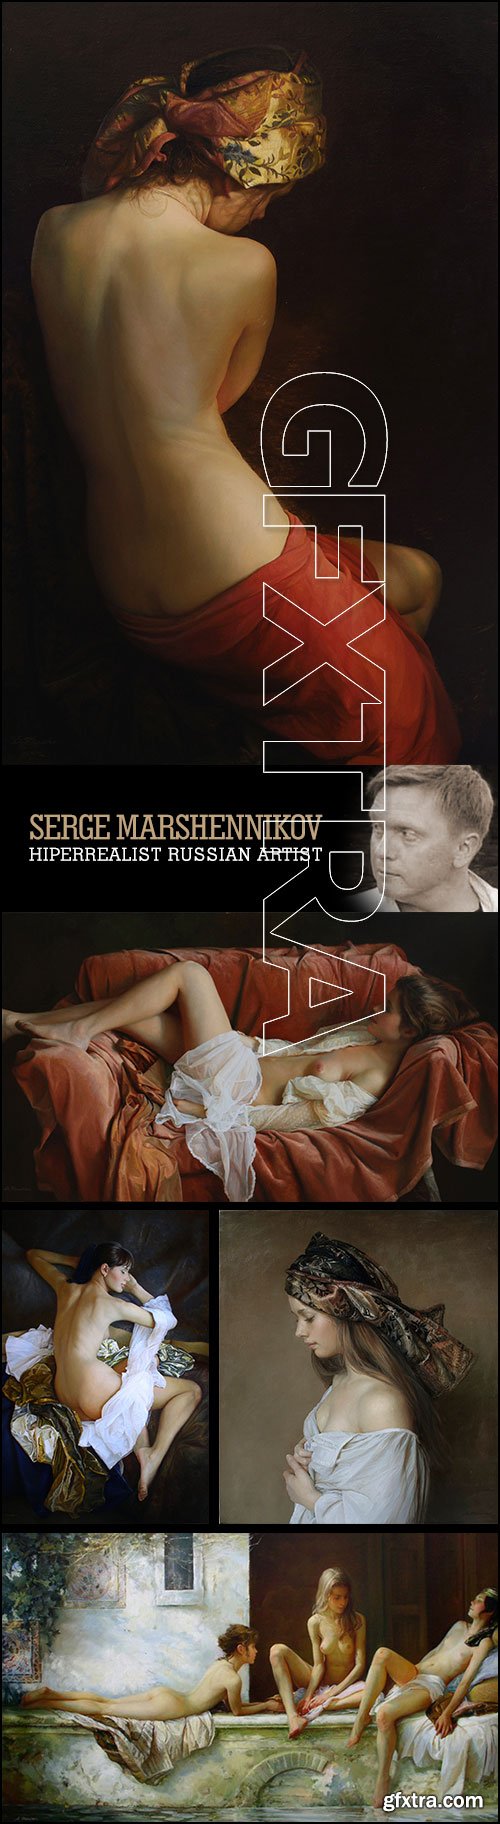 Serge Marshennikov, Hiperrealist Russian Artist